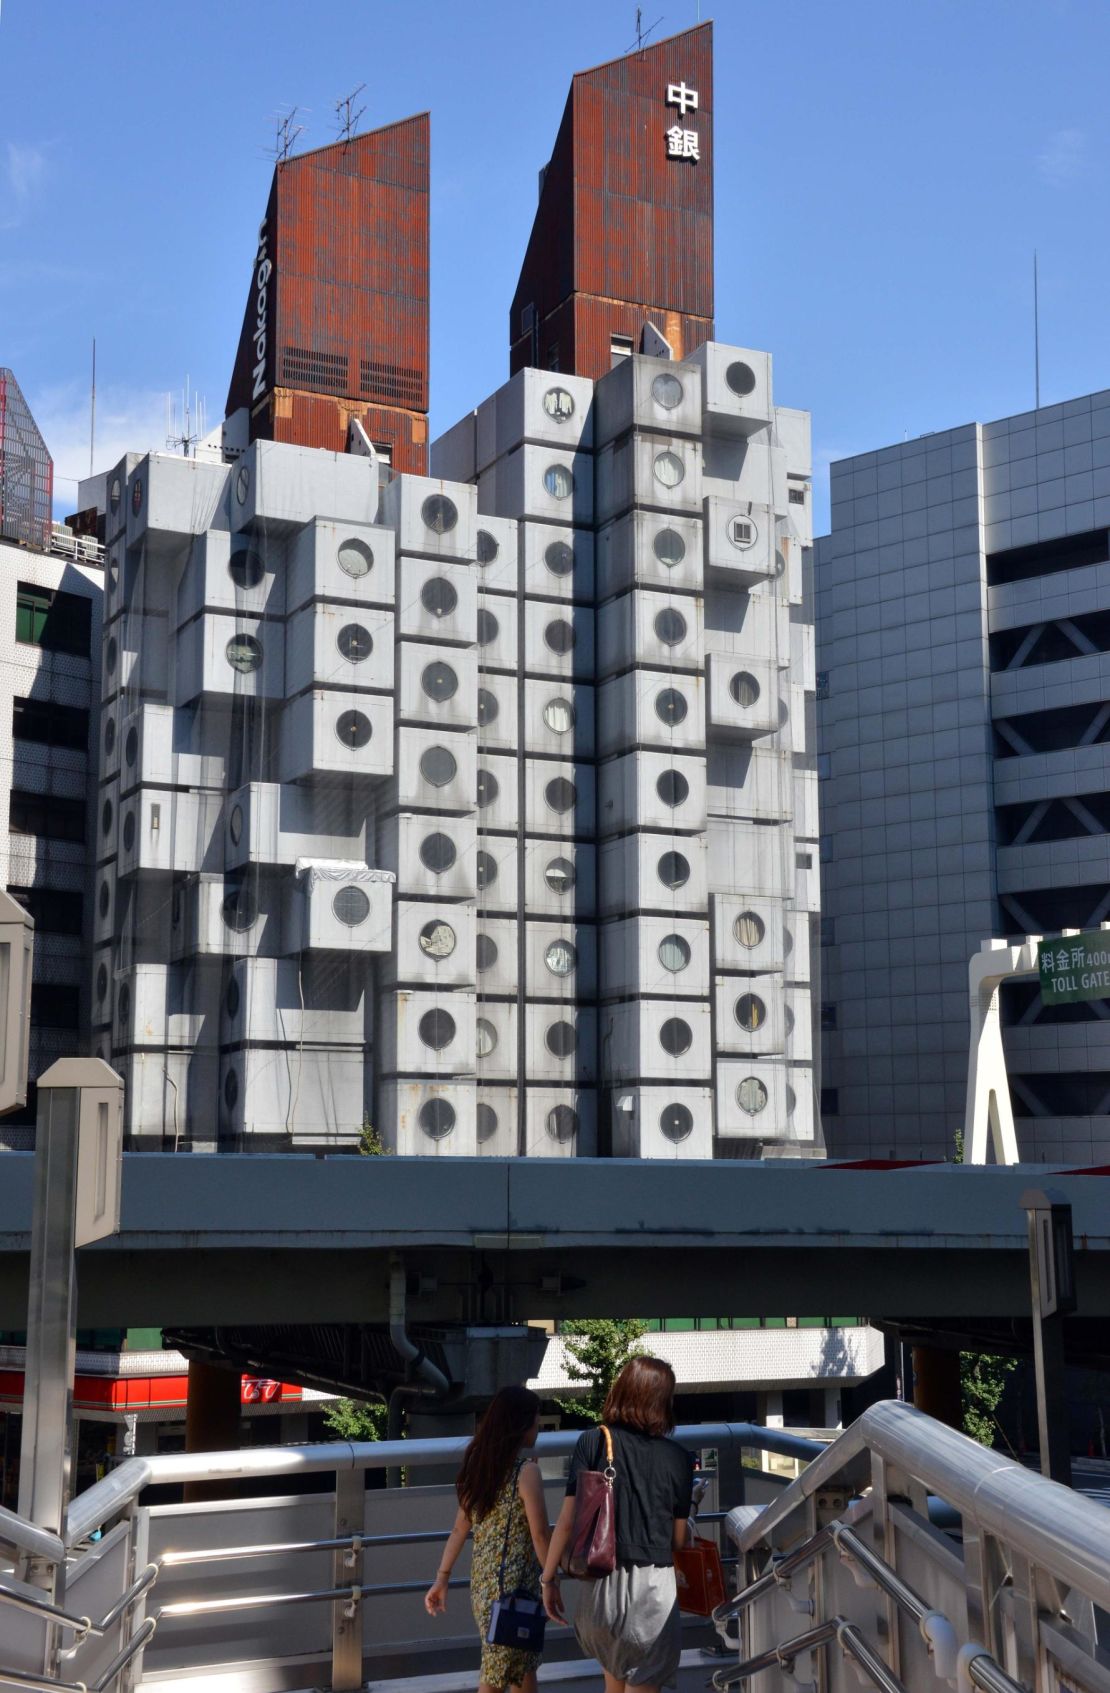 The 140-unit Nakagin Capsule Tower in Tokyo, designed by architect Kisho Kurokawa.